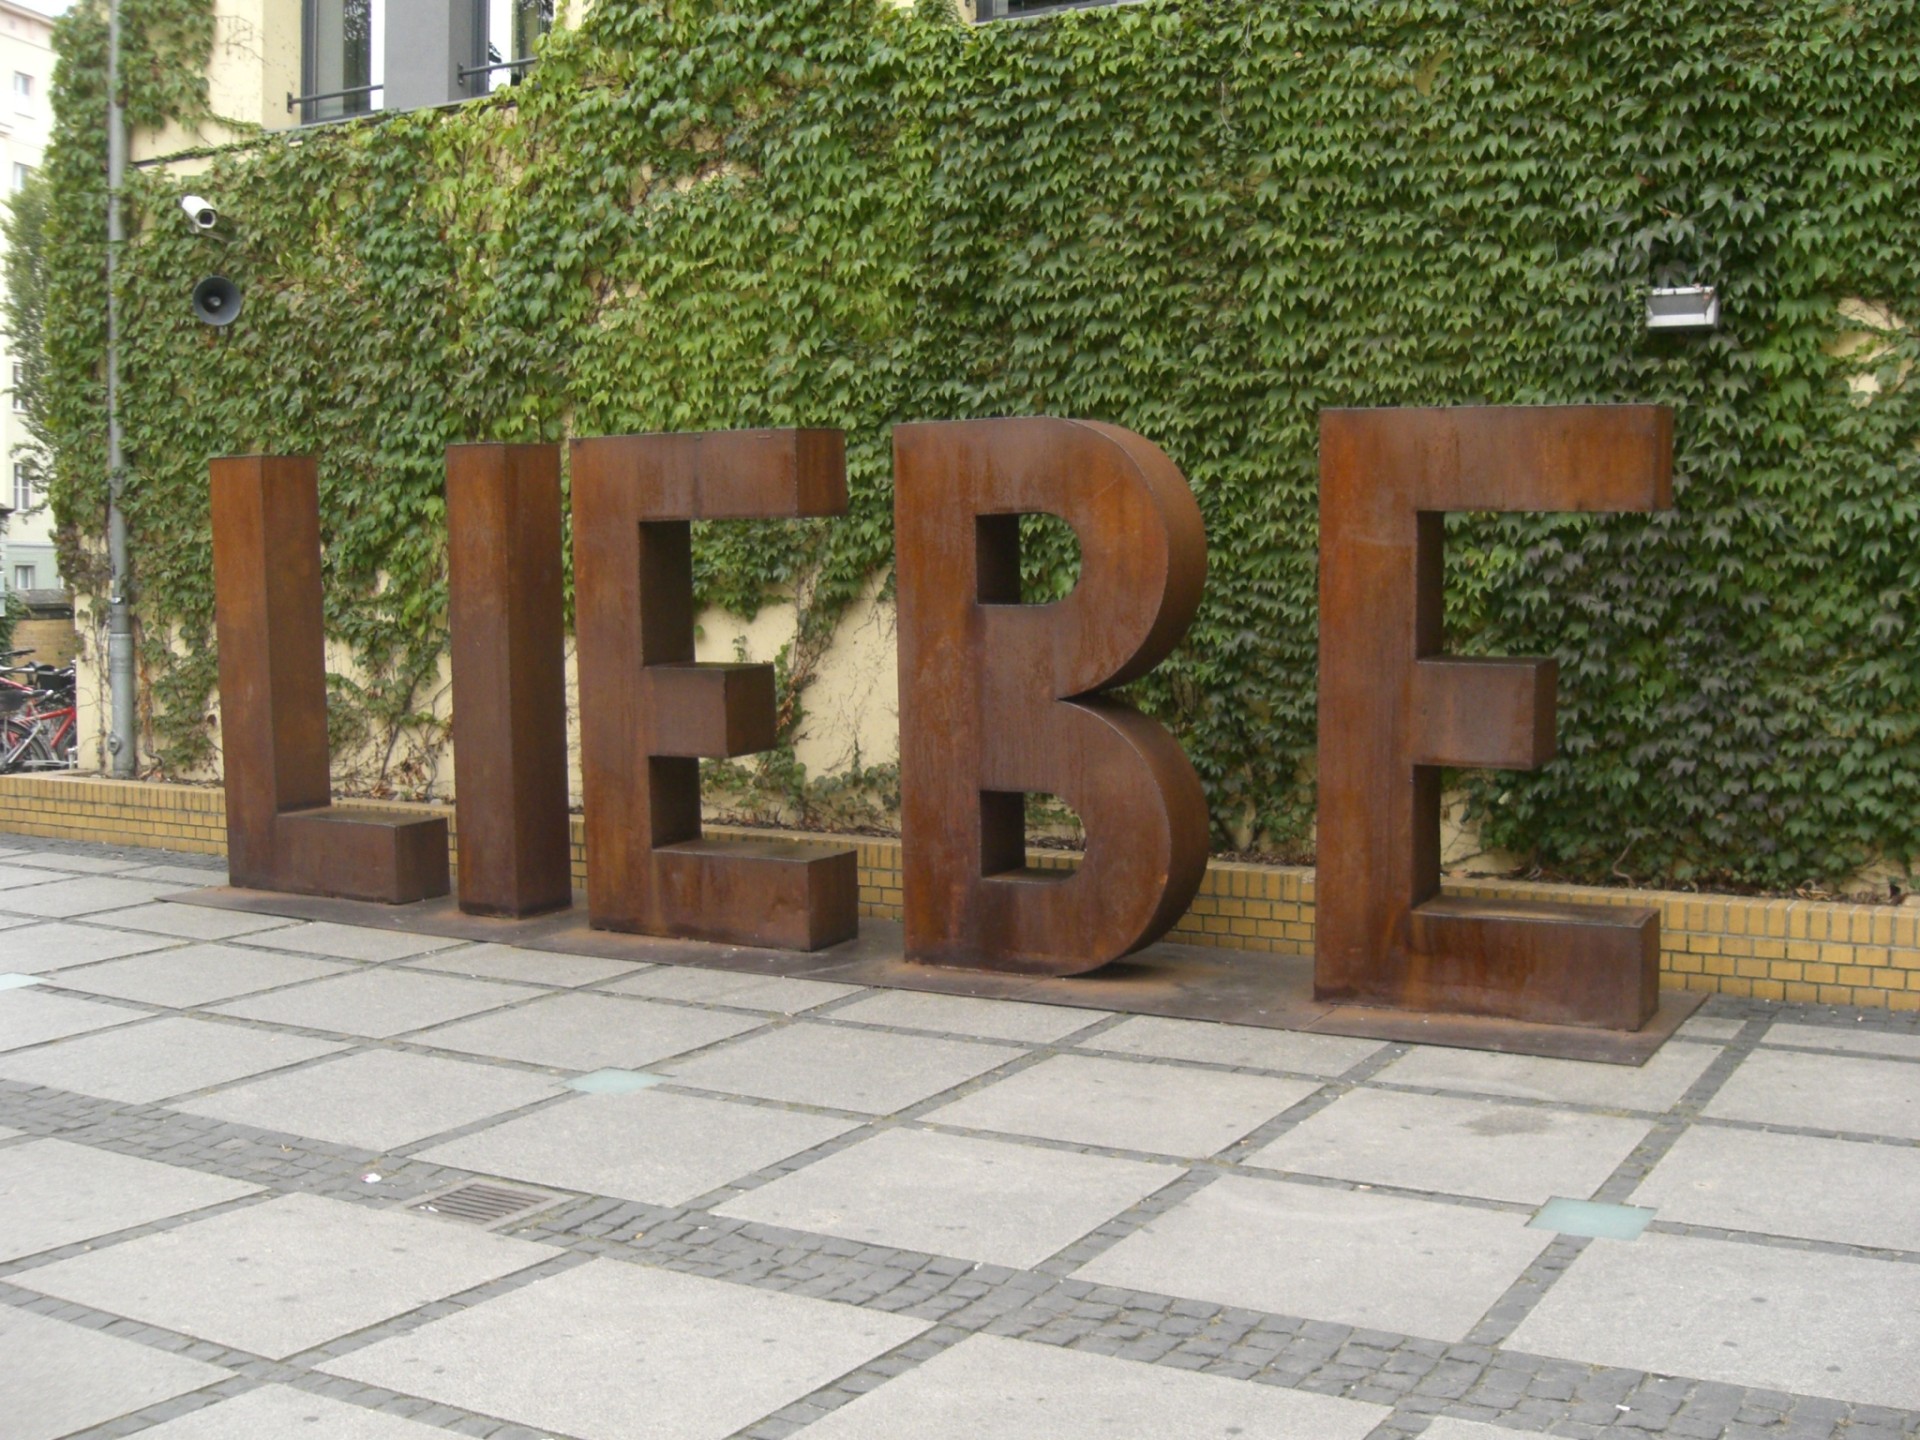 18 sculpture liebe dans une rue de berlin